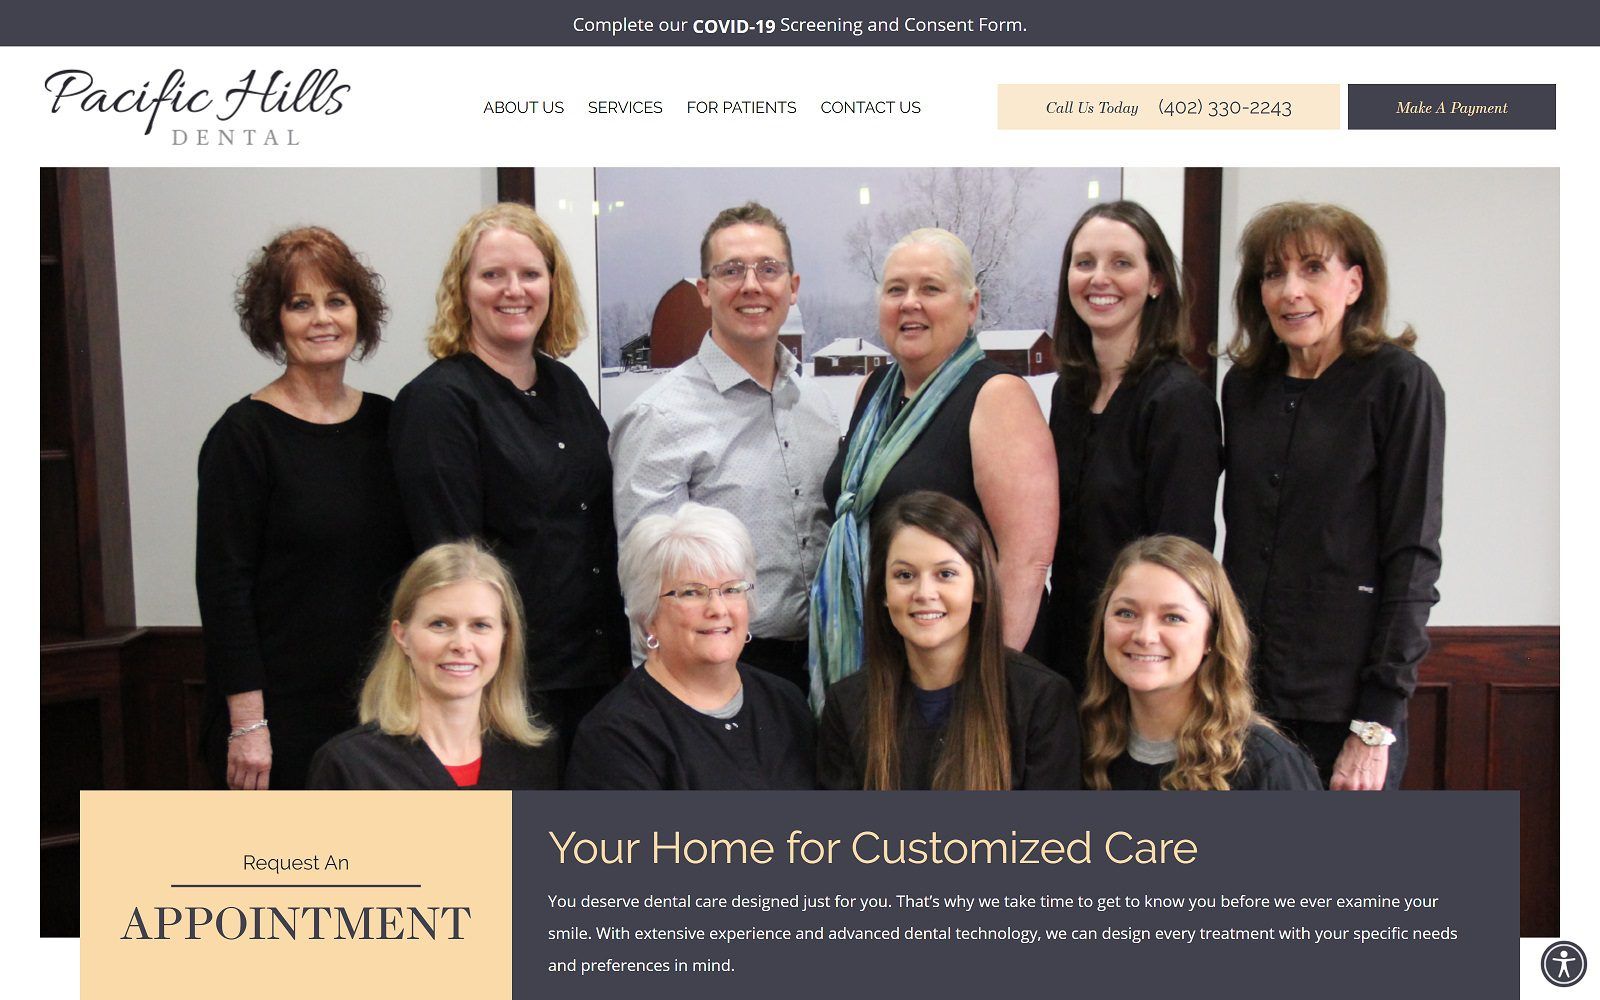 The Screenshot of Pacific Hills Dental Website